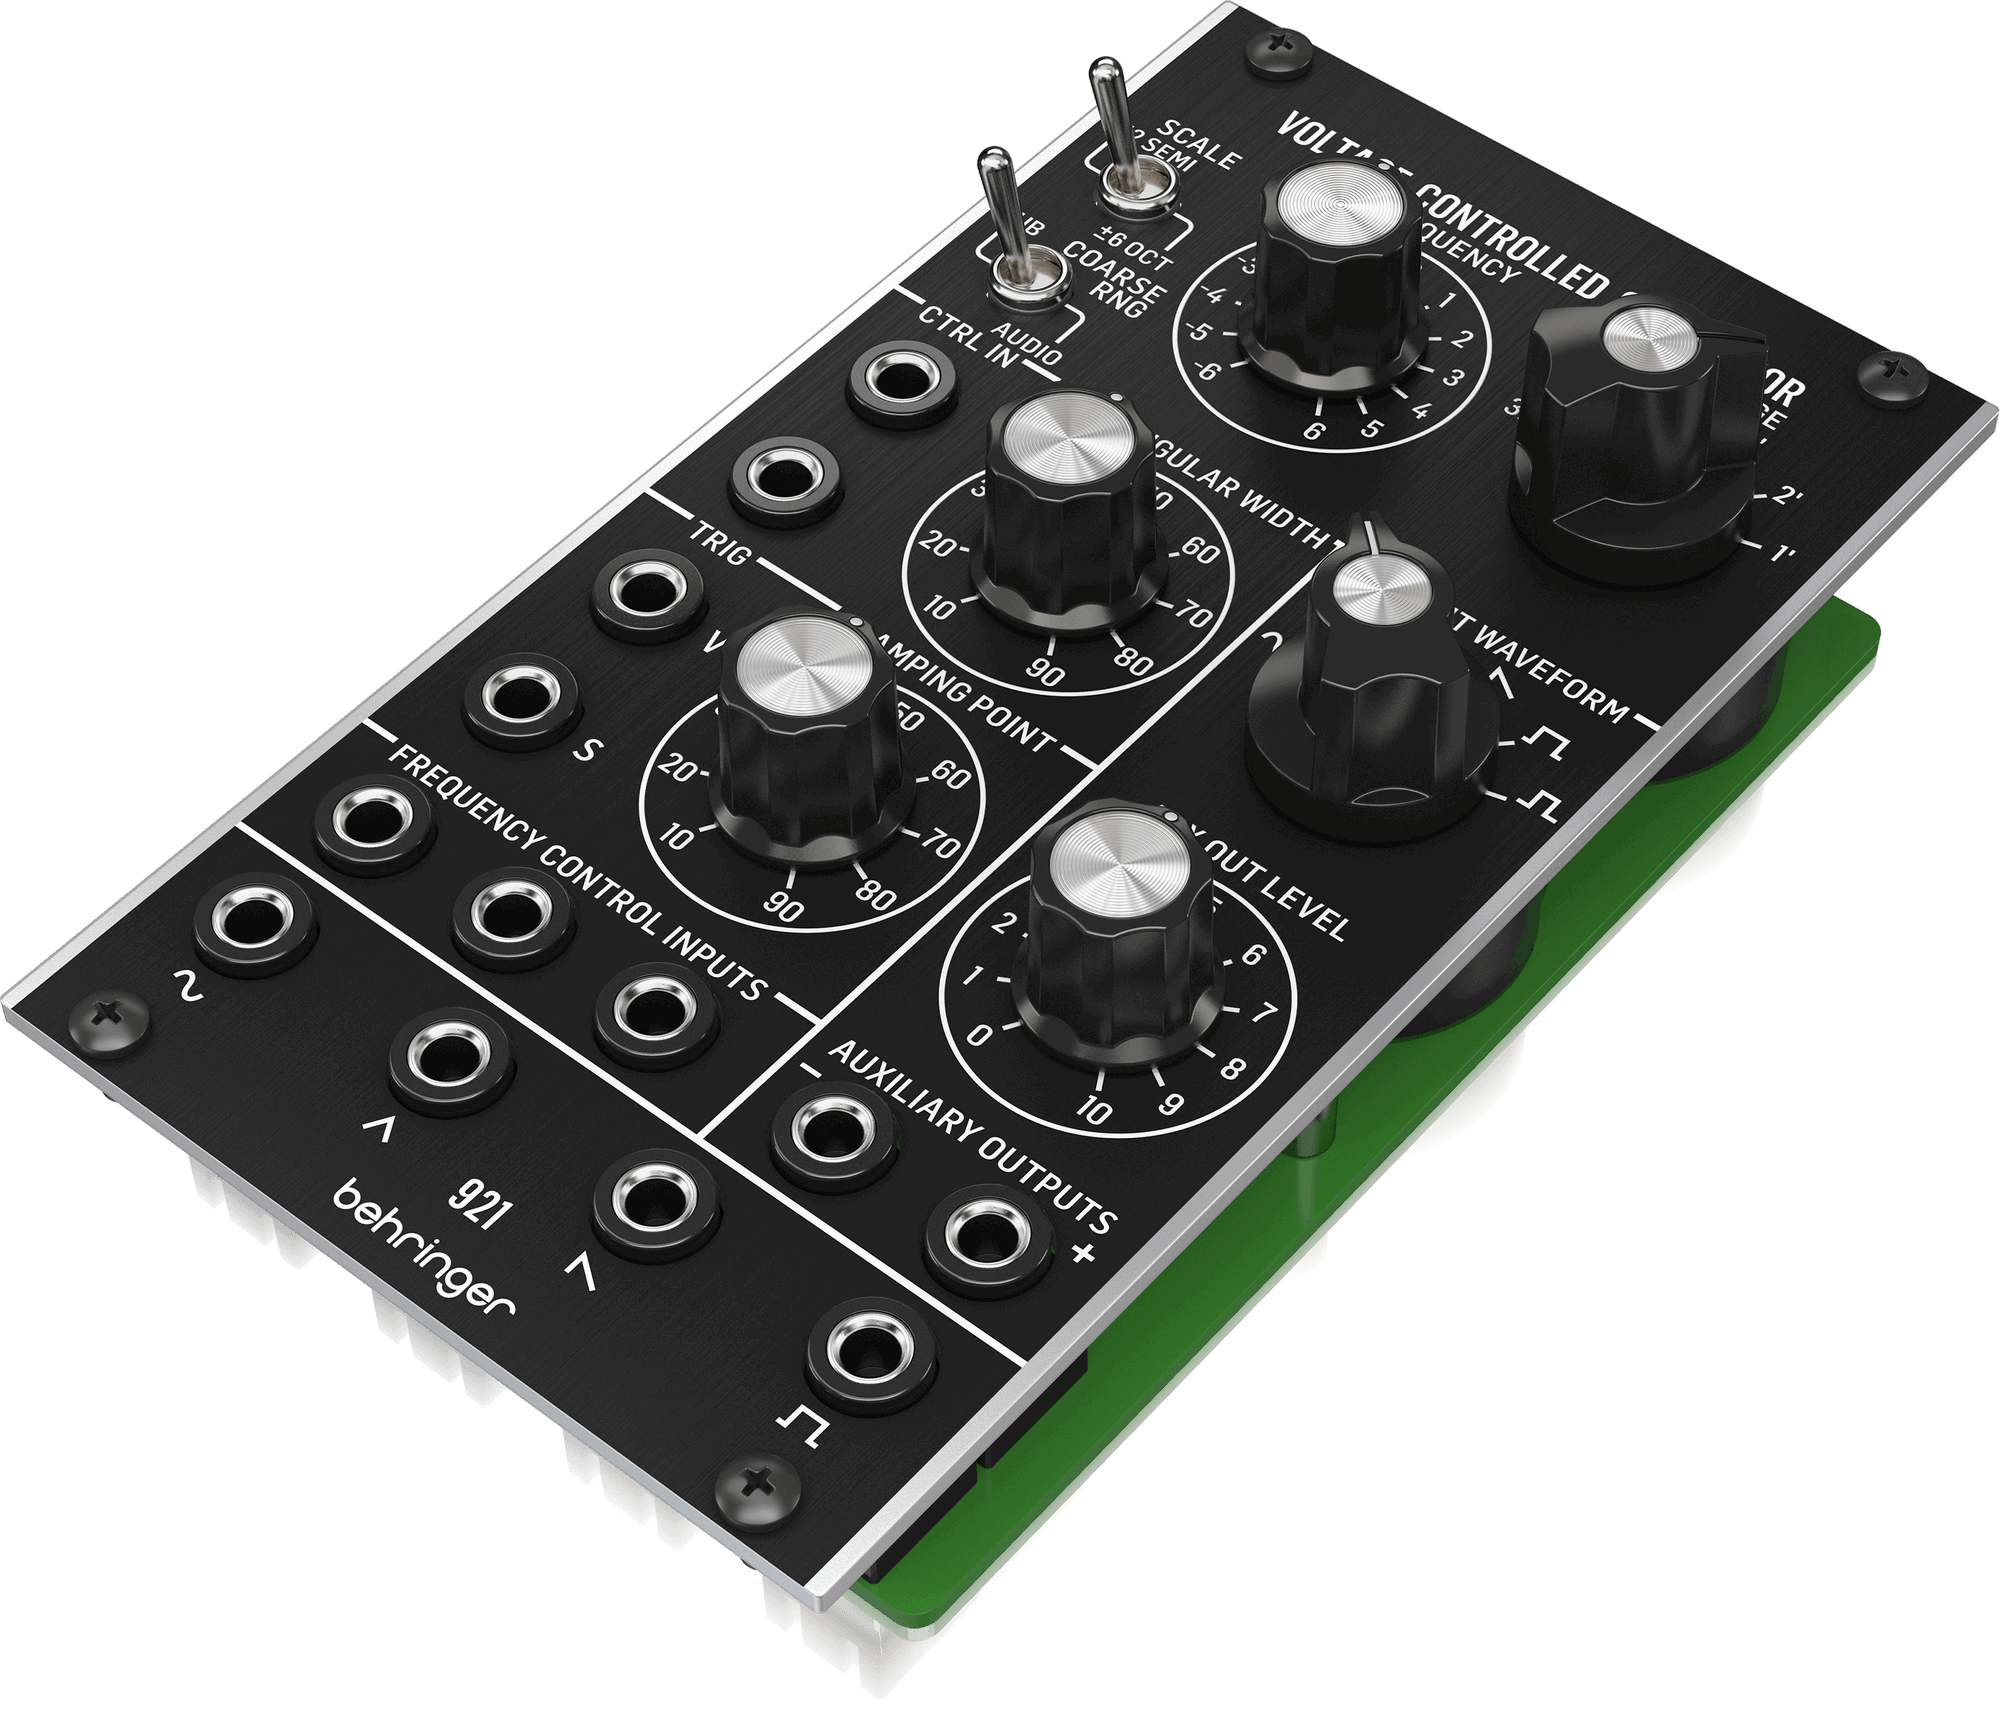 Behringer 921 Voltage Controlled Oscillator Eurorack Module | BEHRINGER , Zoso Music